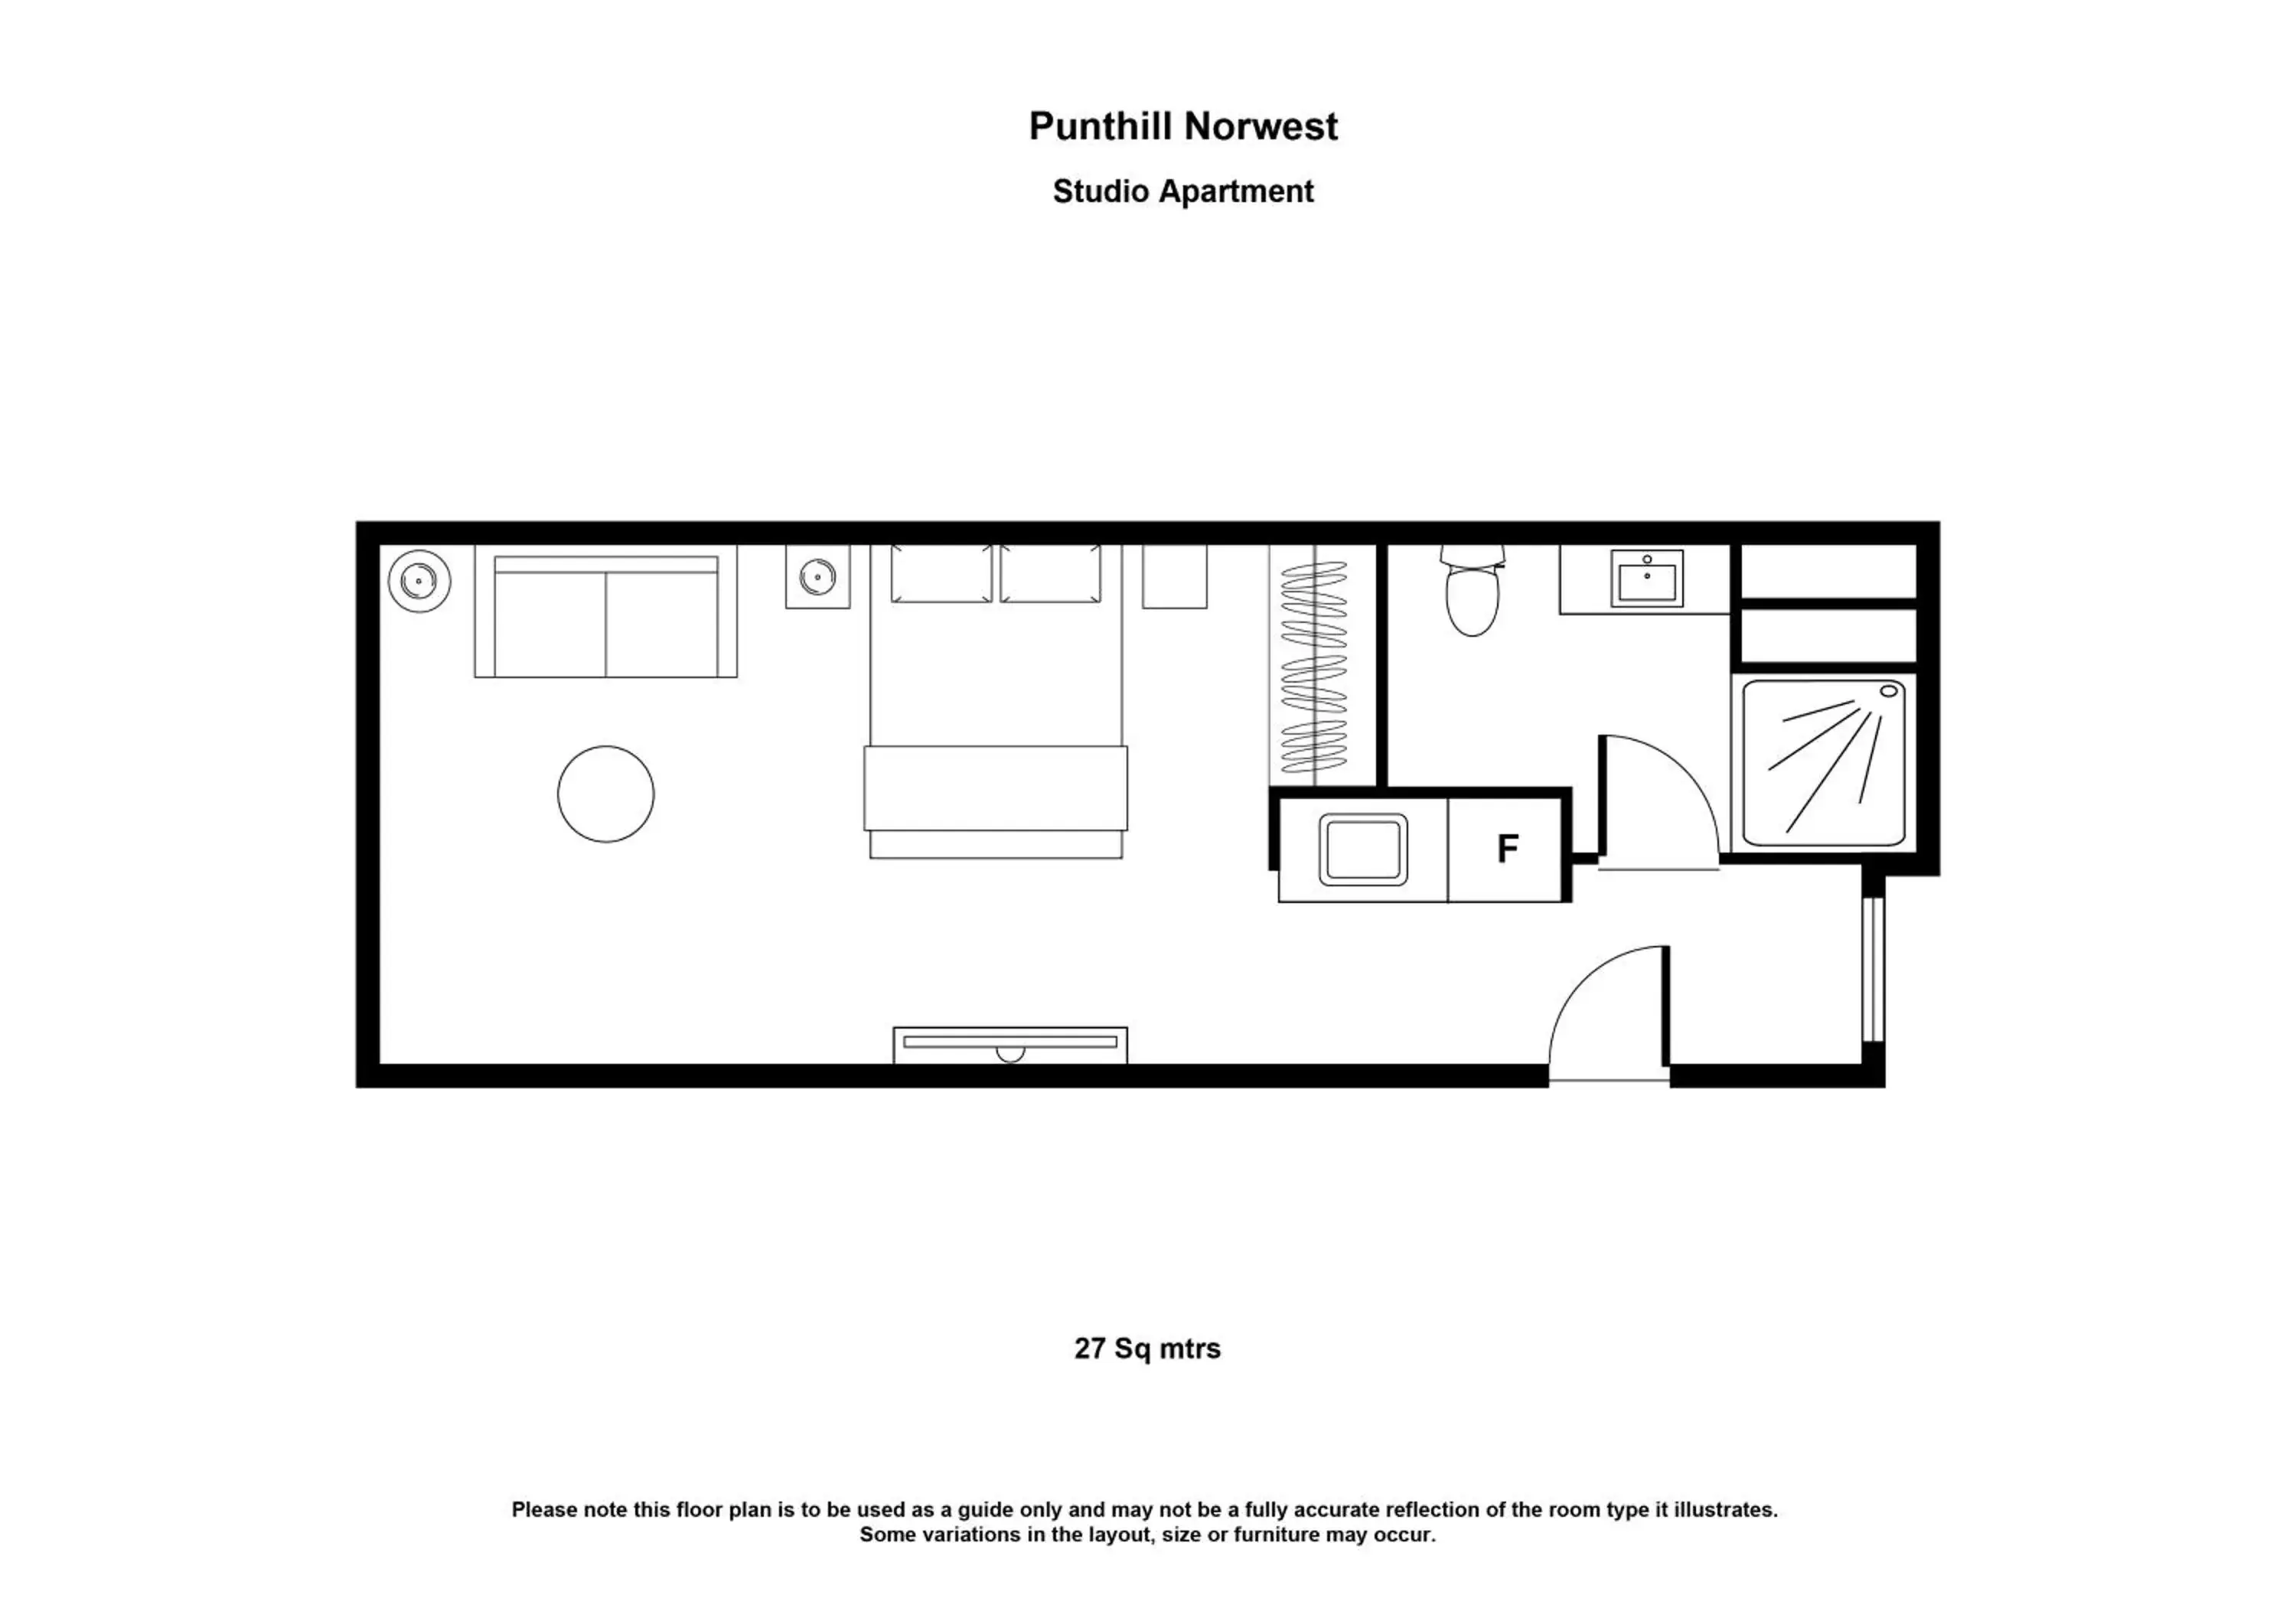 Floor Plan in Punthill Norwest